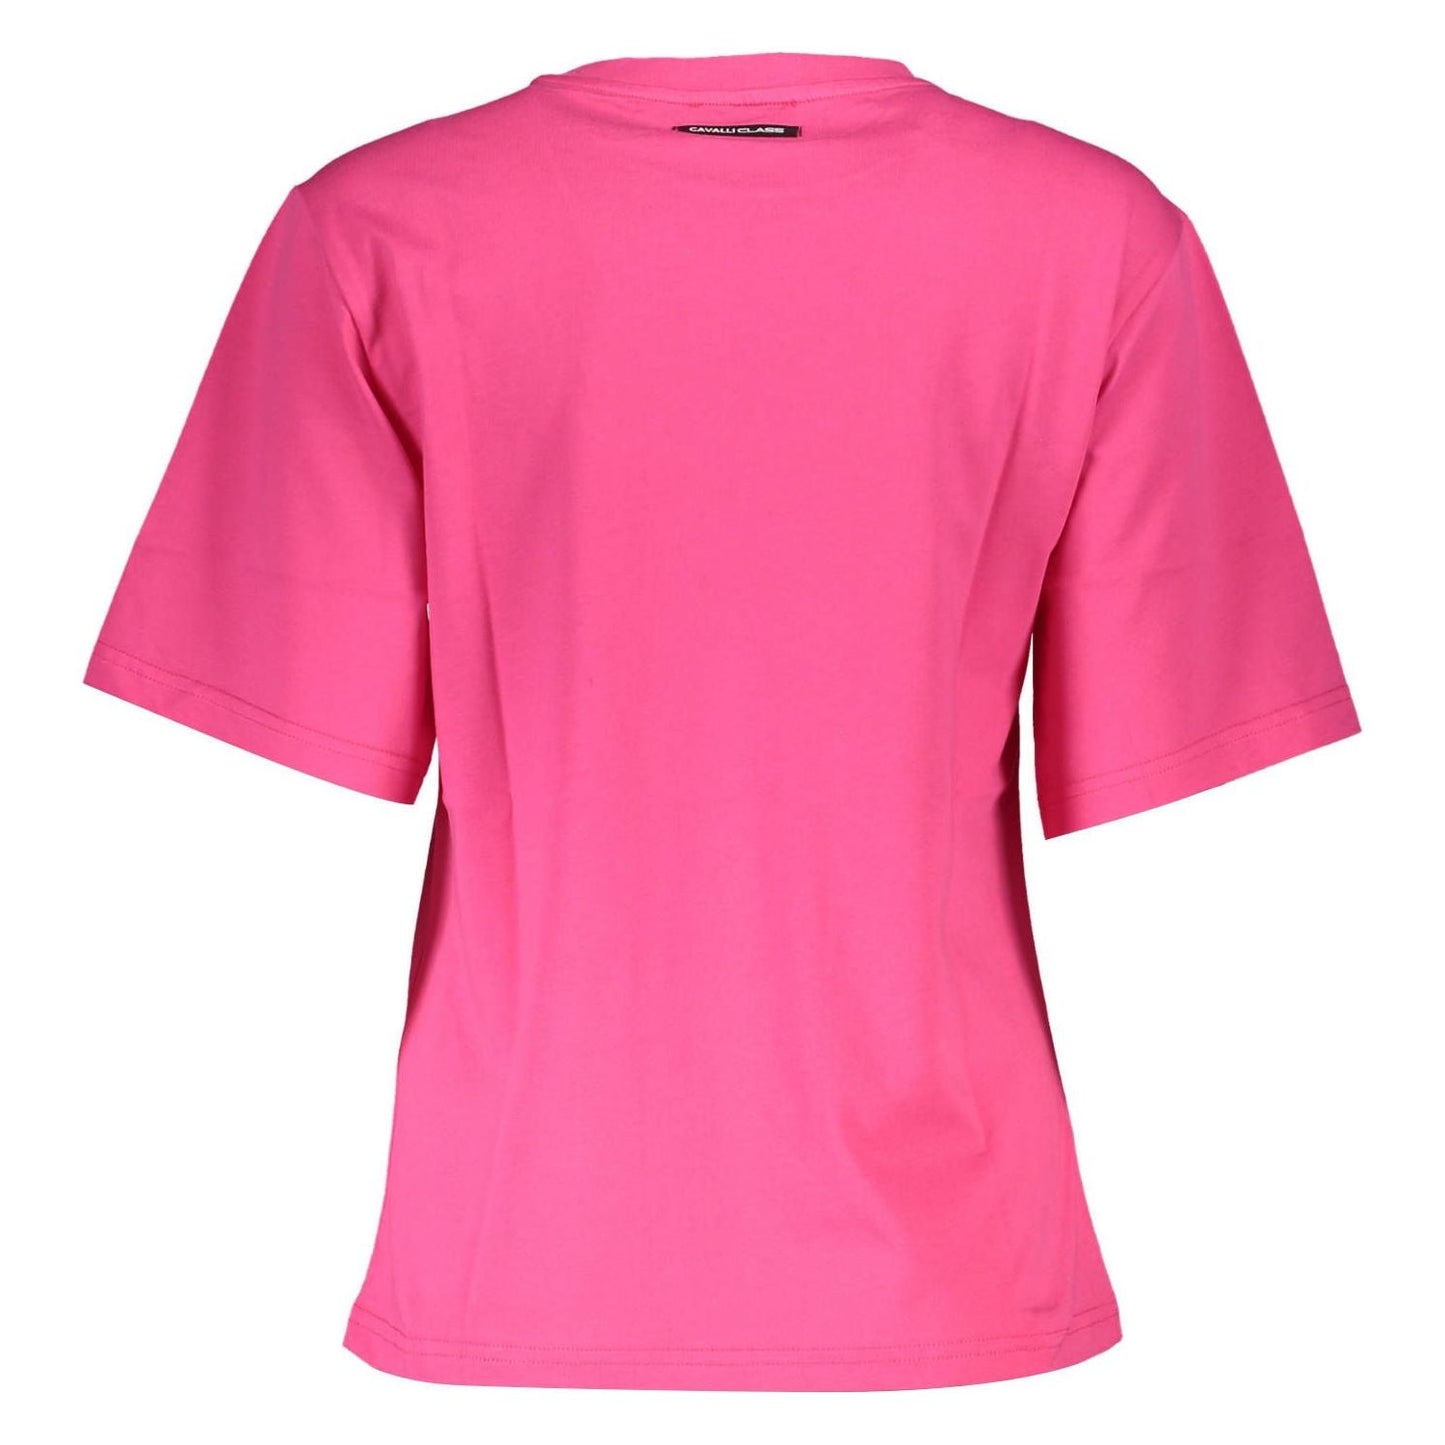 Cavalli Class Elegant Slim Fit Pink Tee with Chic Print elegant-slim-fit-pink-tee-with-chic-print